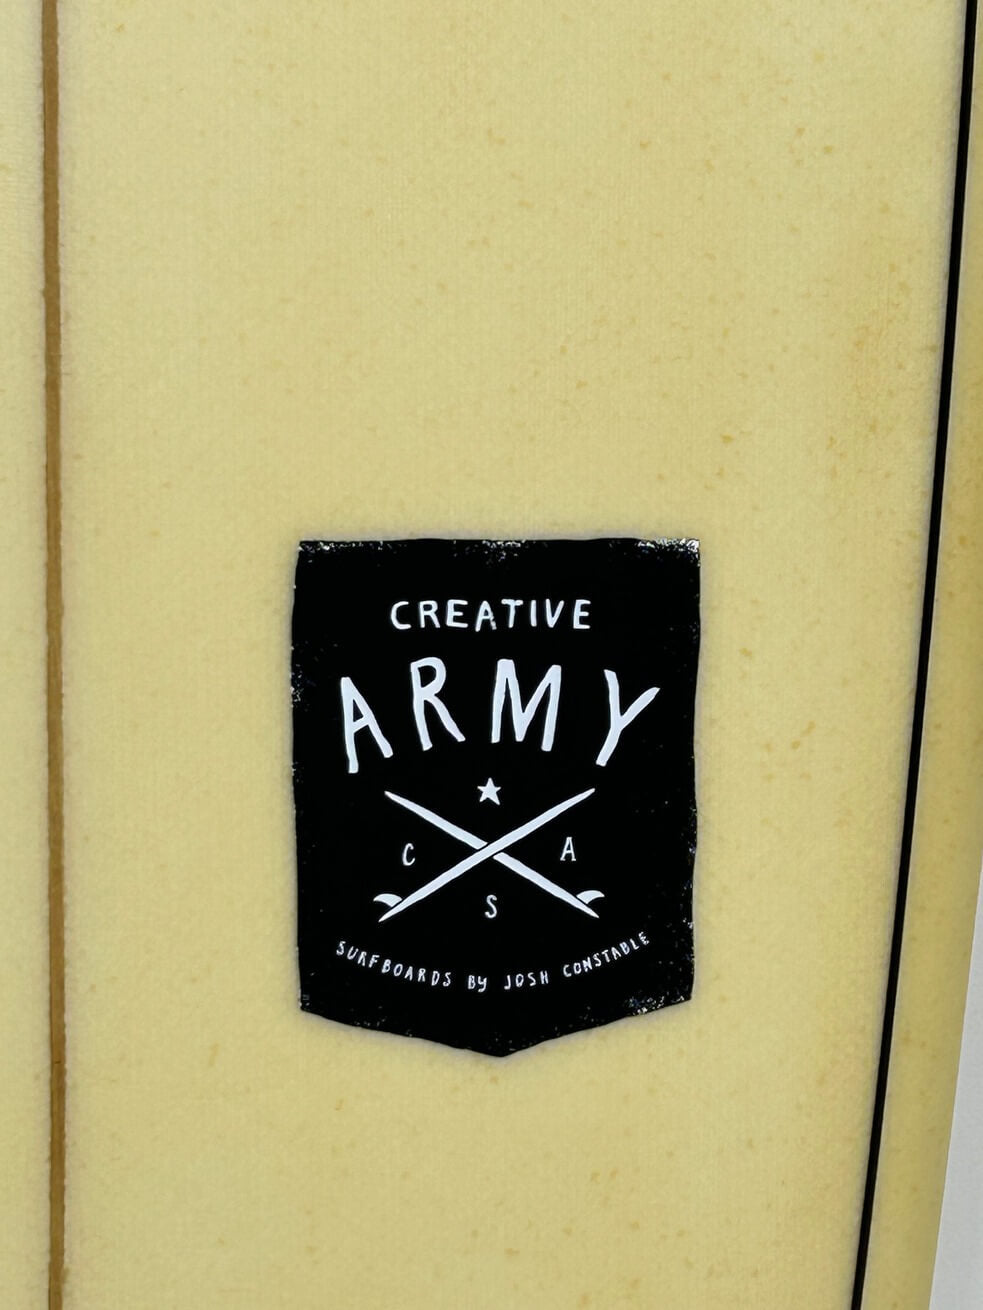 6'10" Creative Army Huevo SLX EPOXY